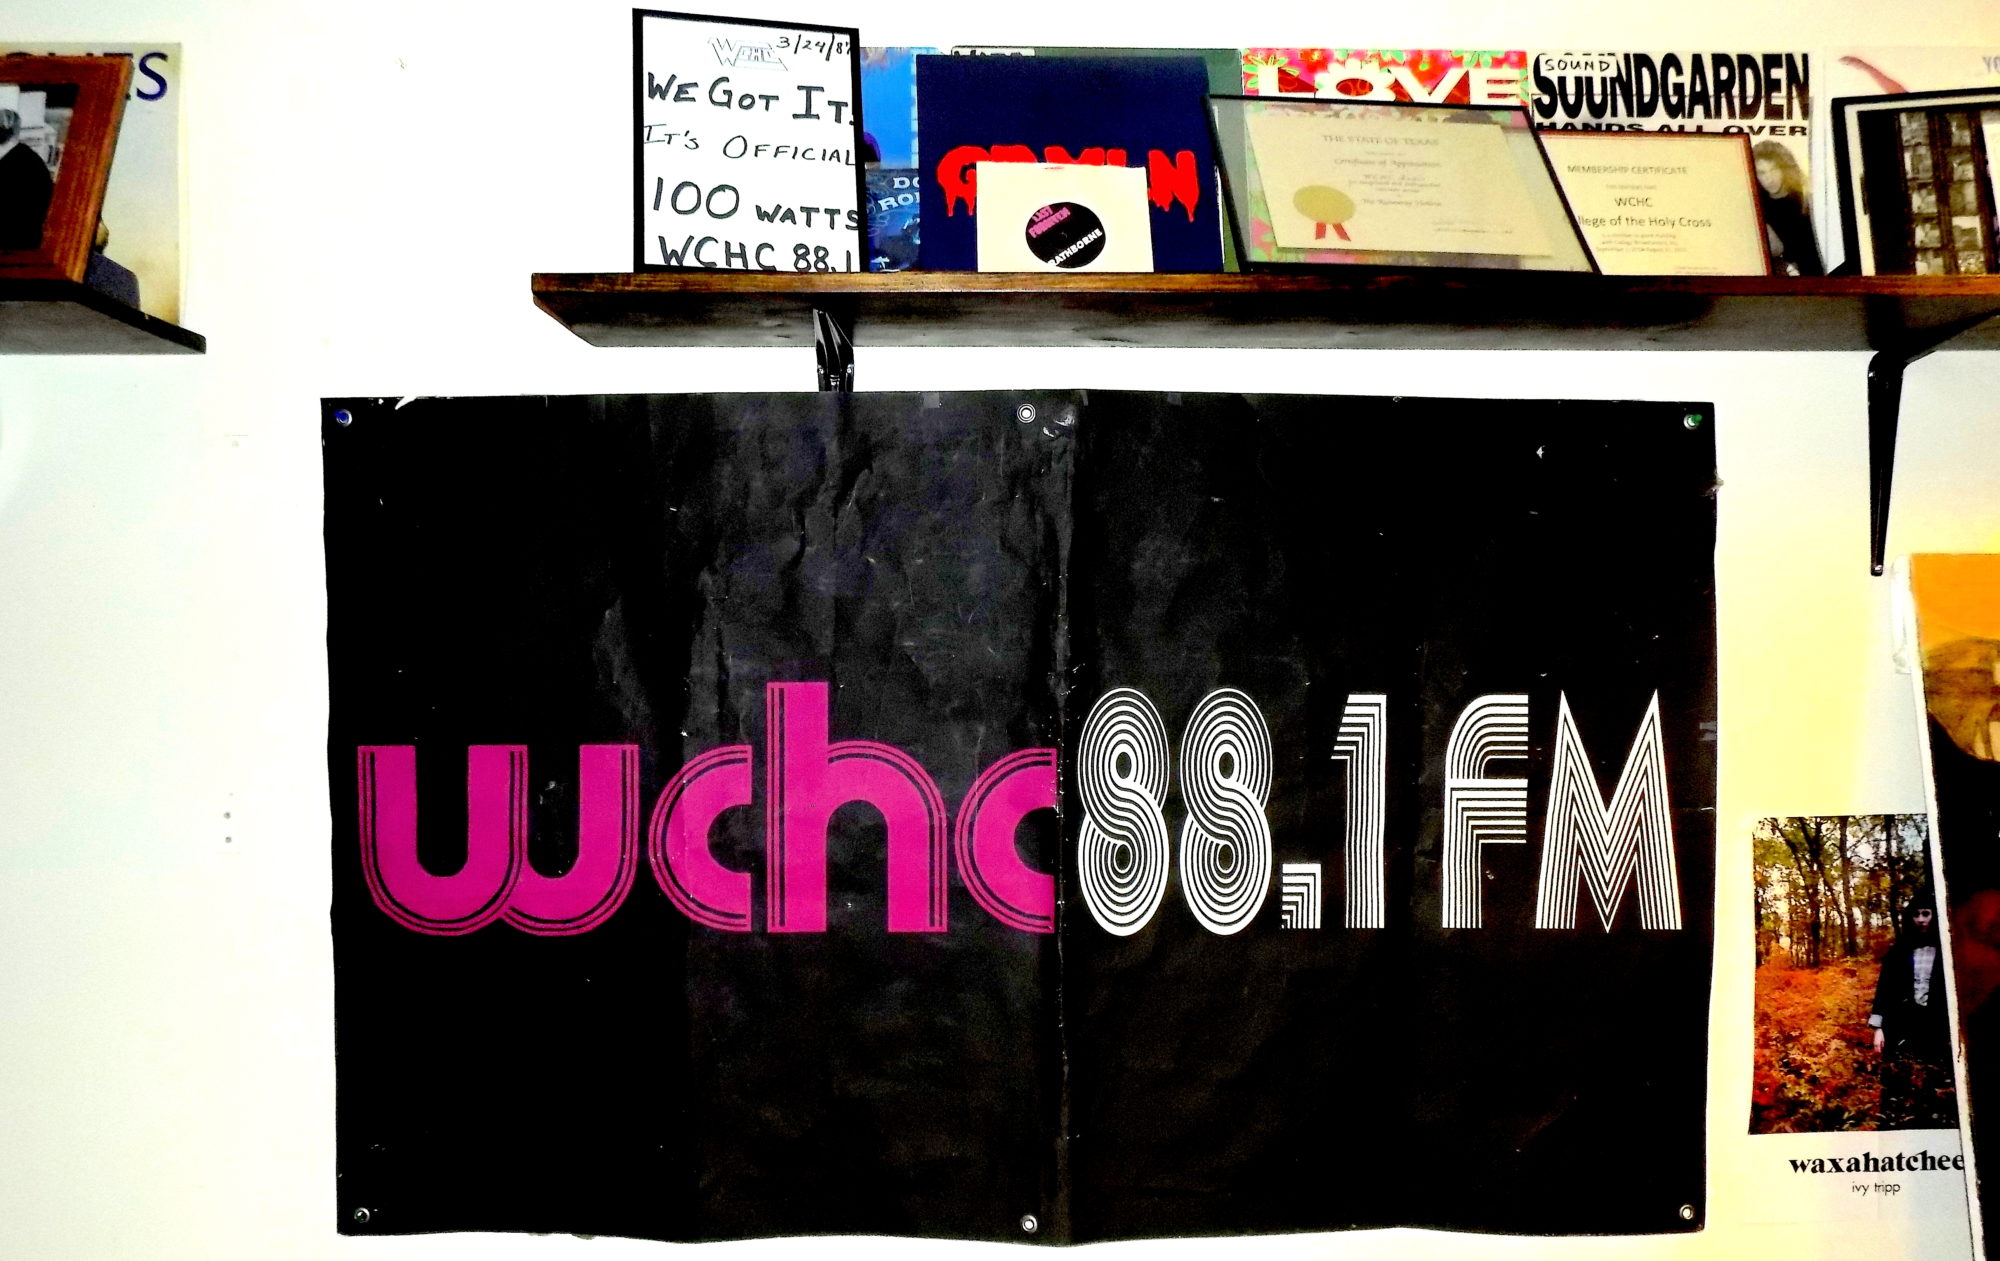 WCHC 88.1 FM